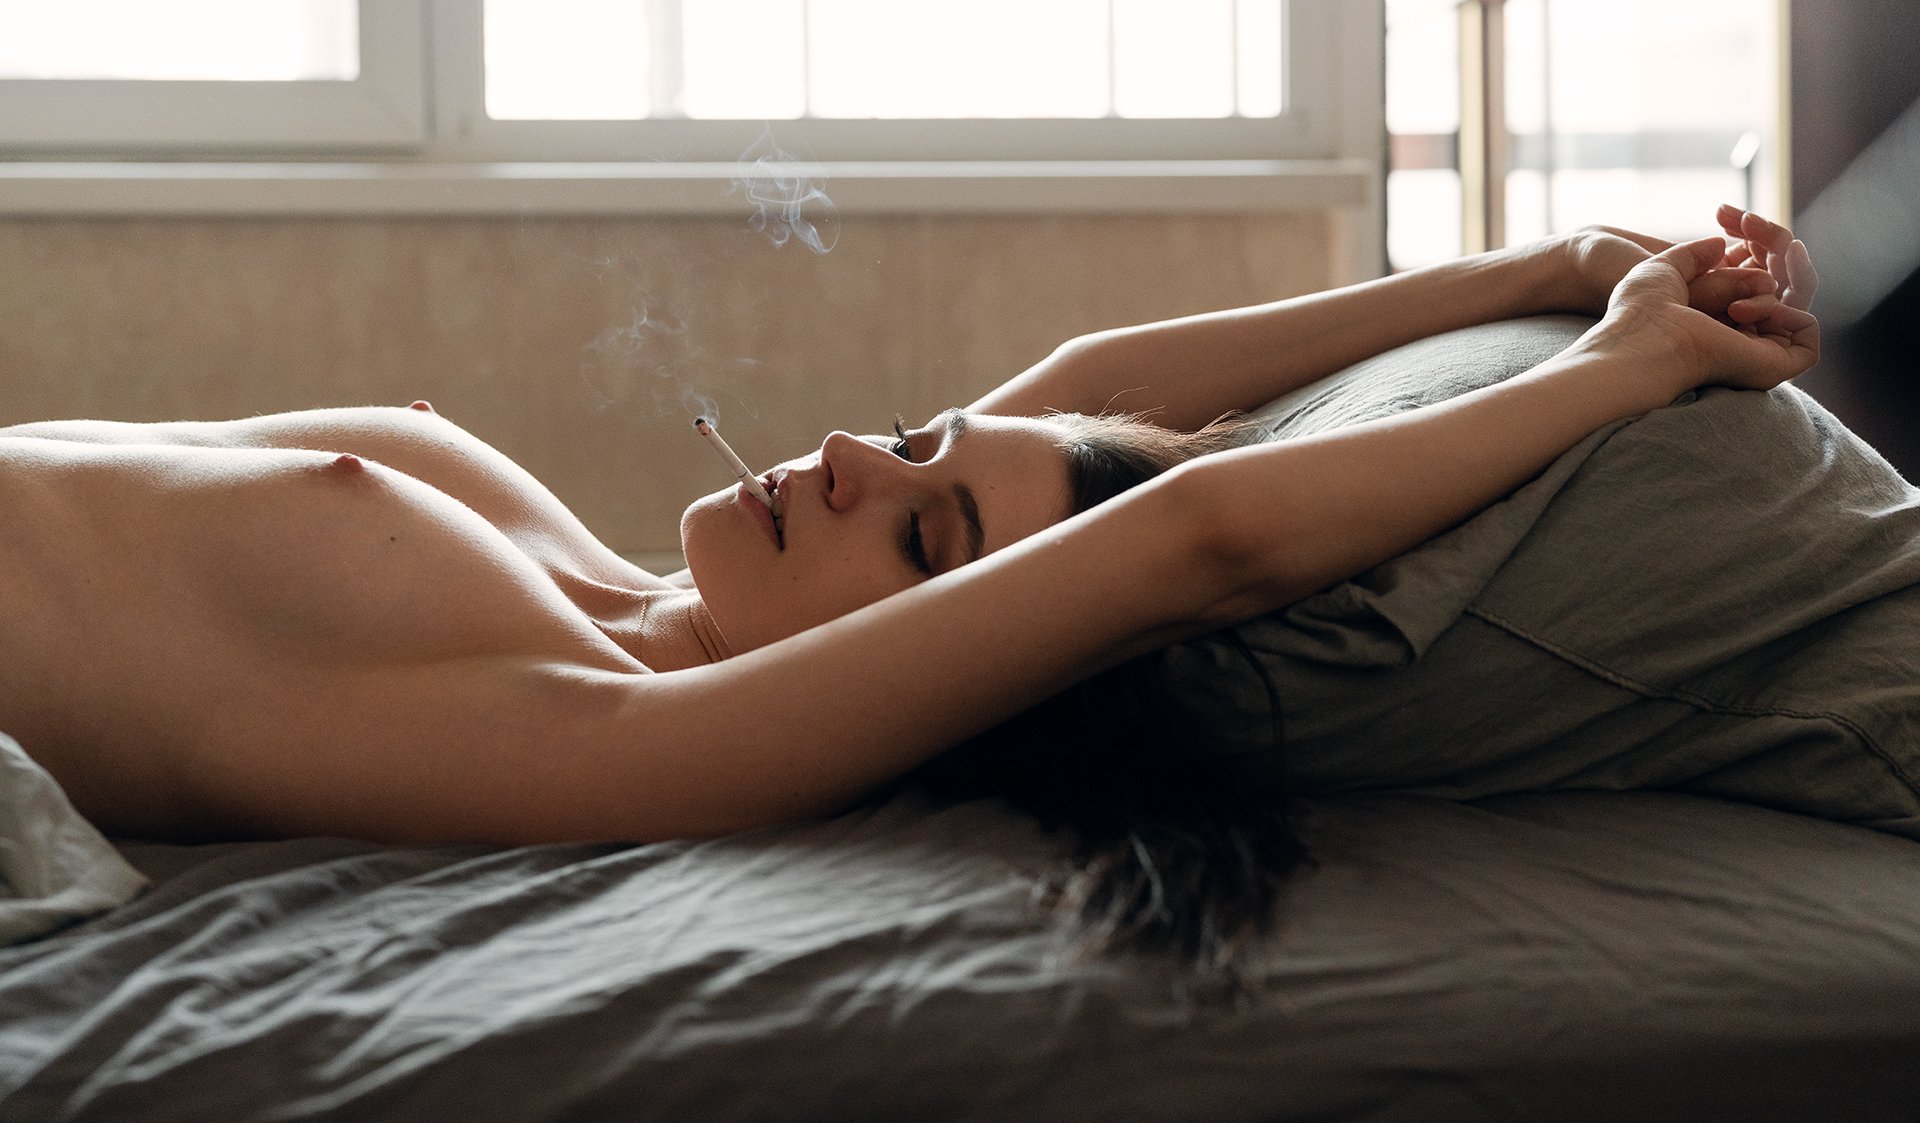 girl, nude, naked, moscow, at home, bed, morning, коверильича, smoking, smoke, cigarette, nice, beauty, beautiful, Роман Филиппов